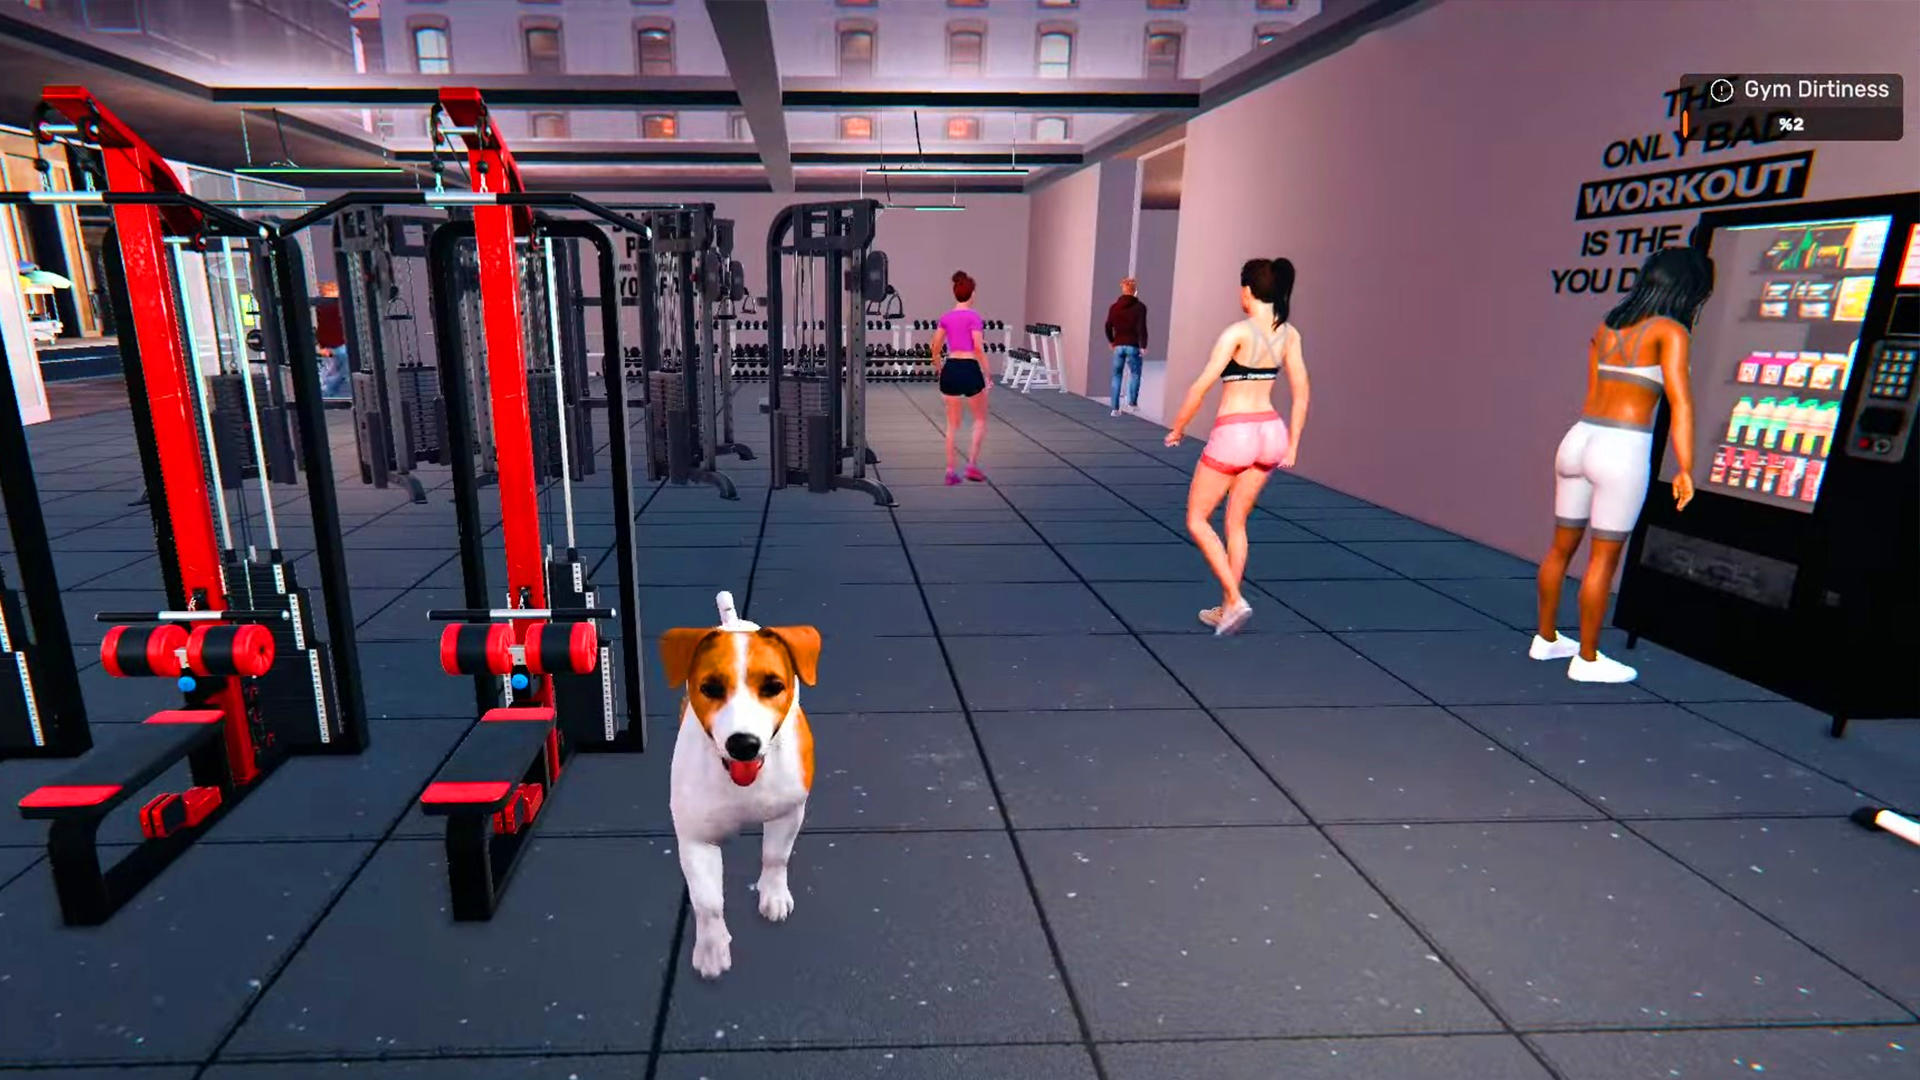 Gym Simulator 24 : Gym Tycoon screenshot game